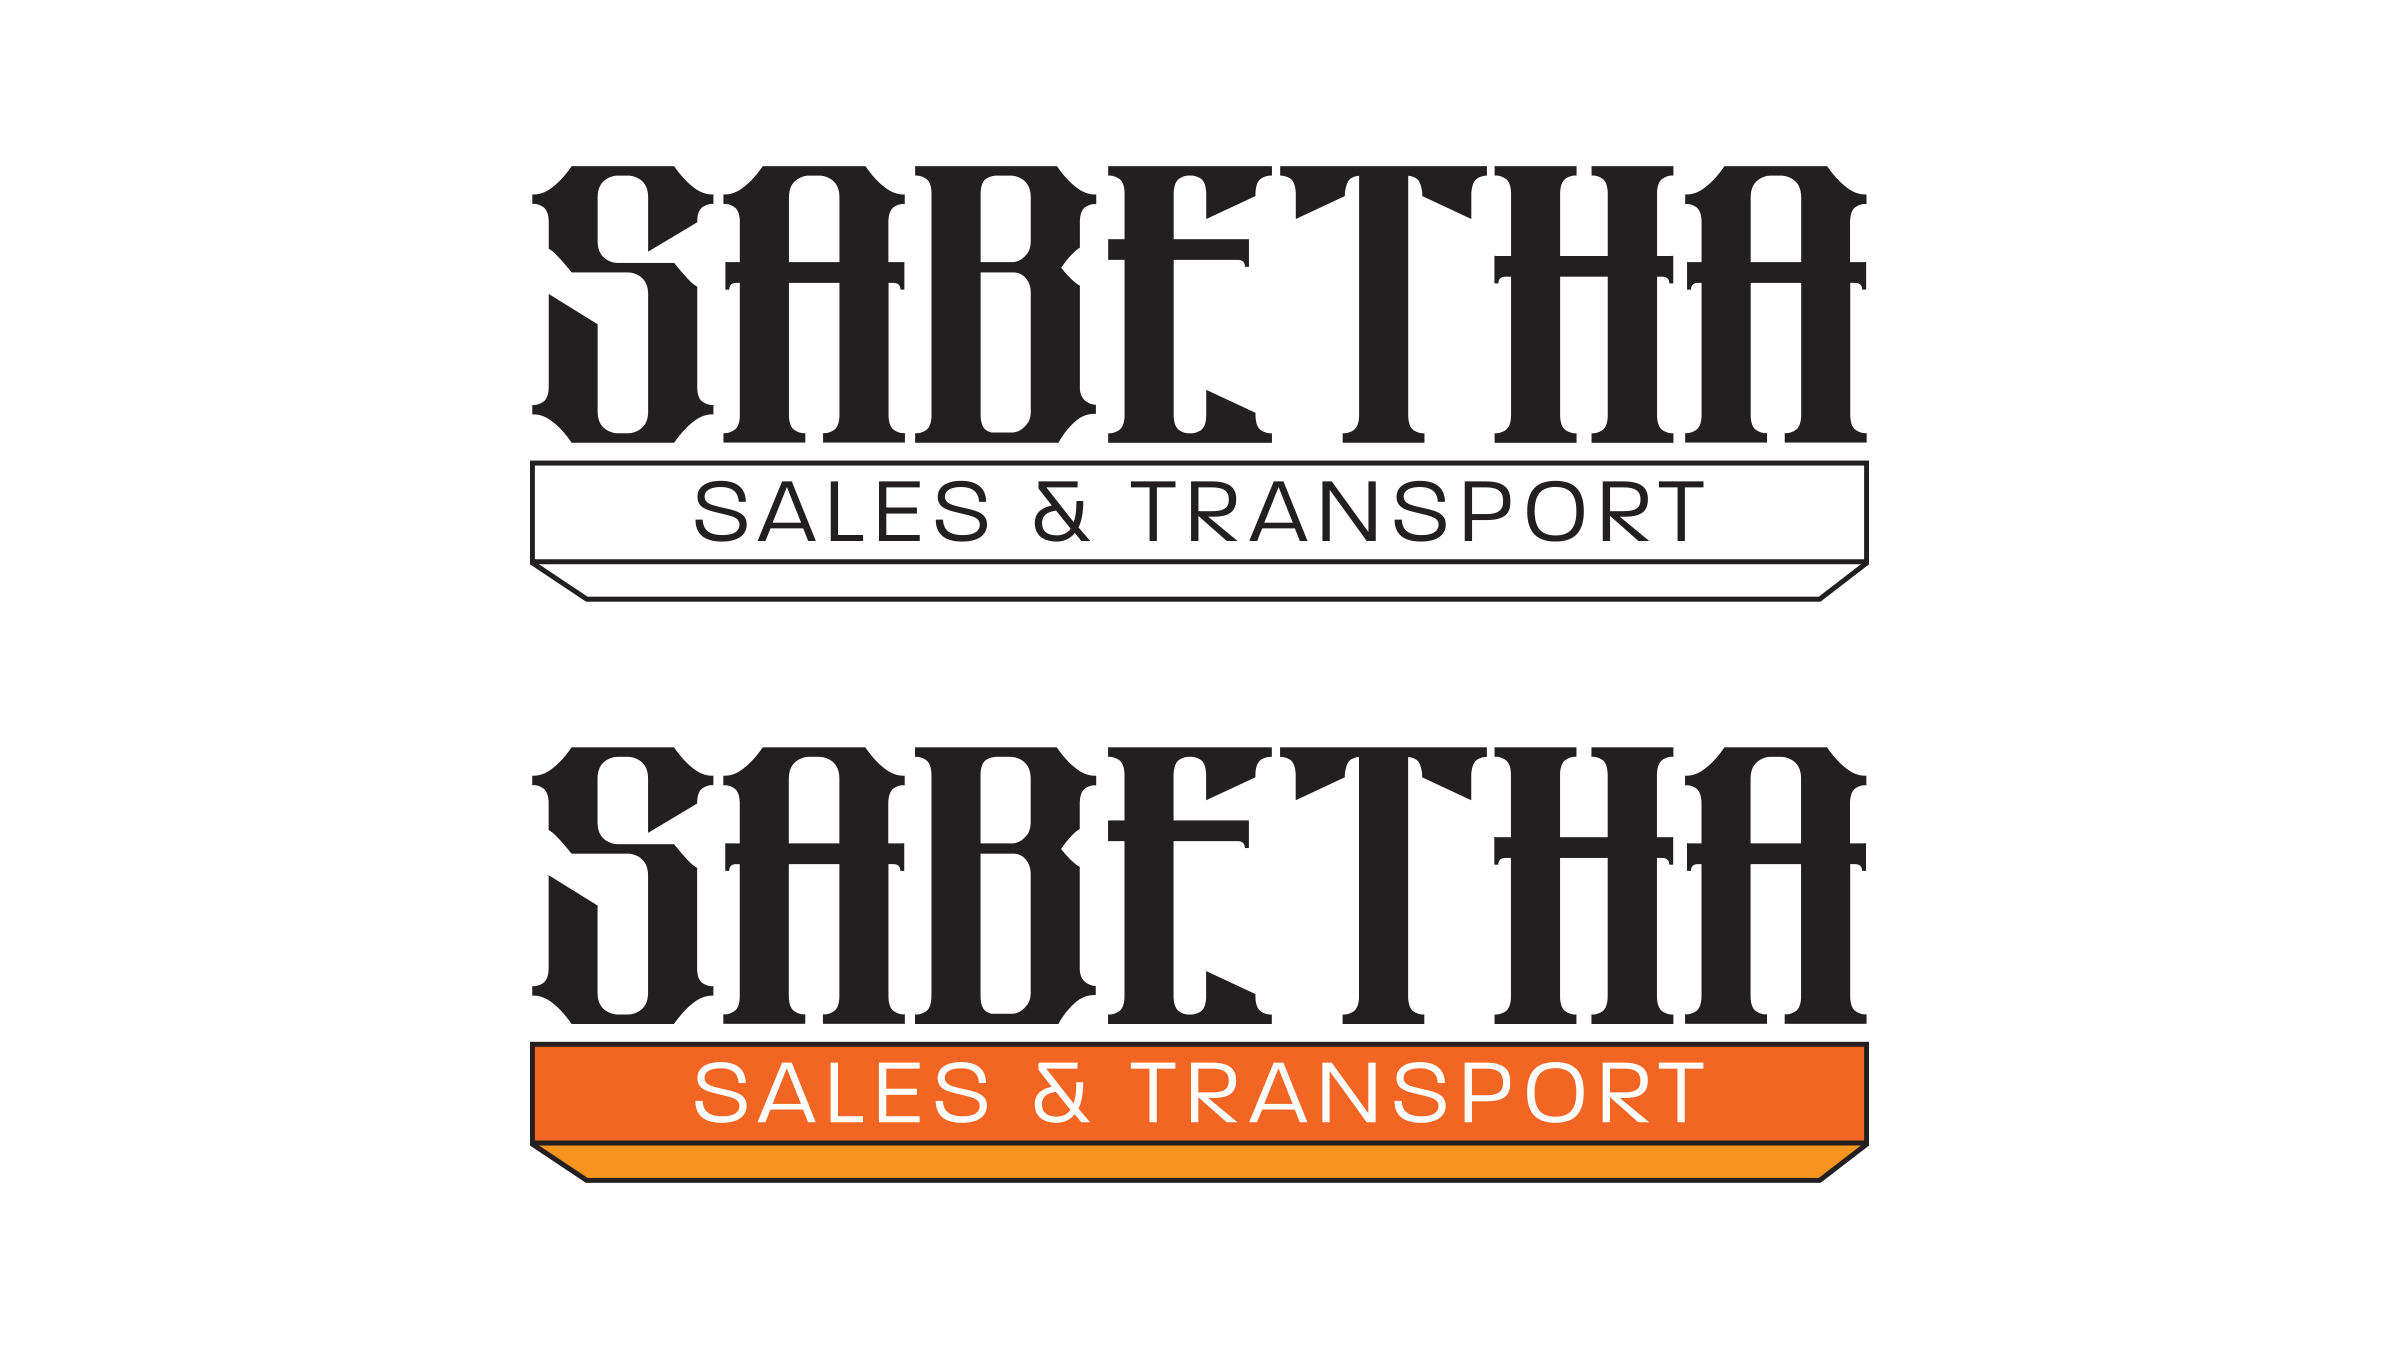 Sabetha-Sales-Logo-2.png